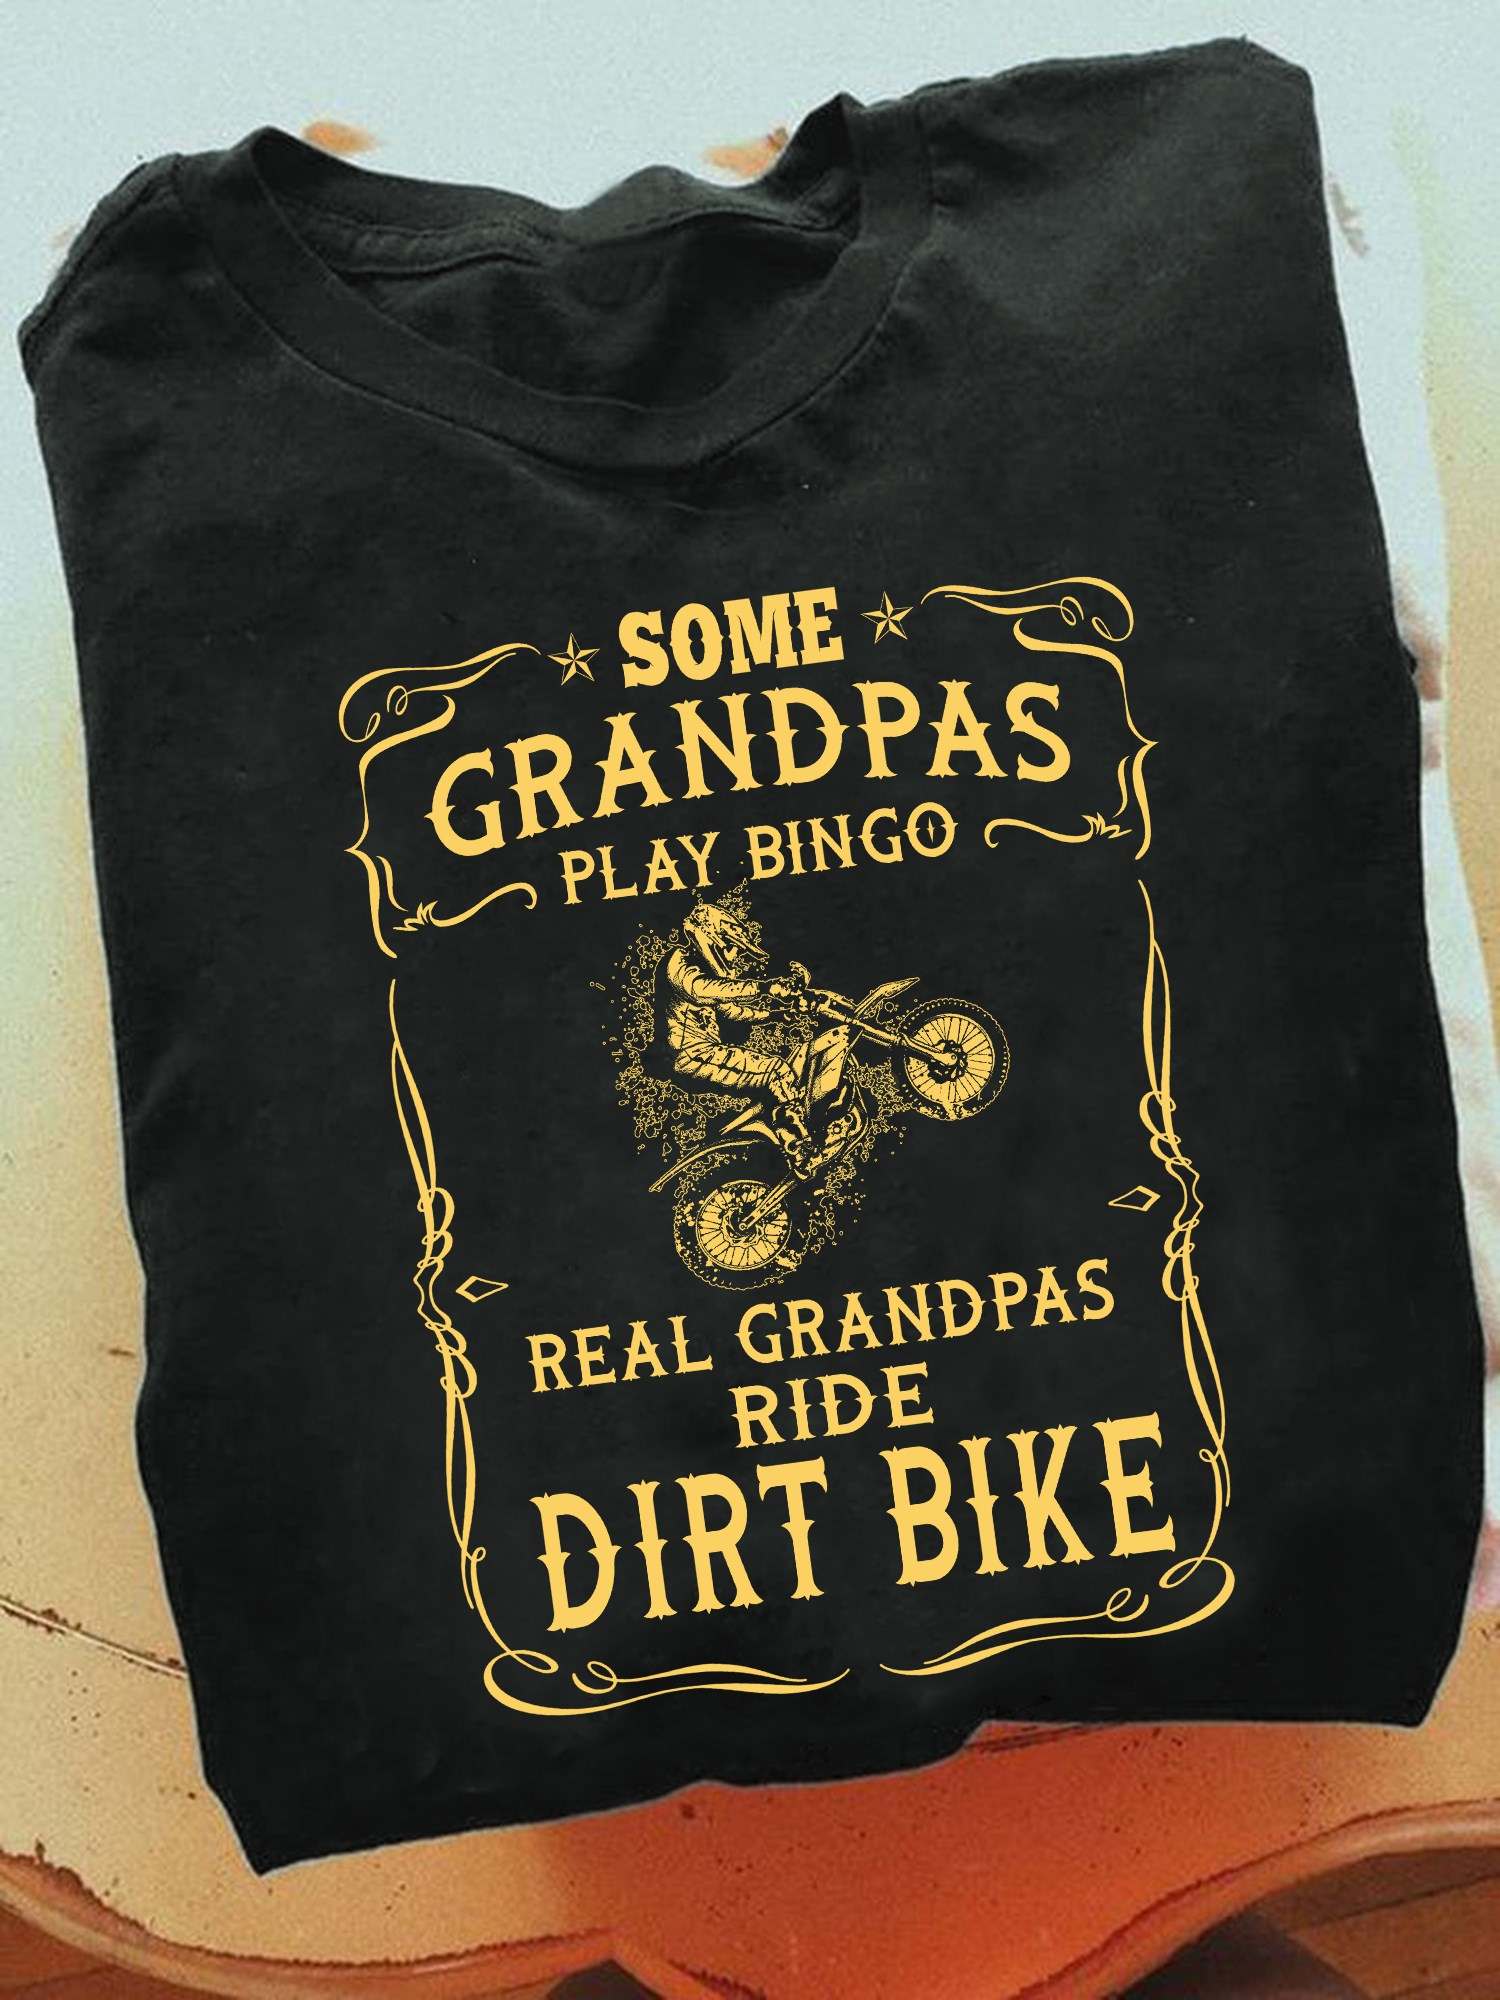 Some grandpas play bingo real grandpas ride dirt bike - Dirt bike grandpas